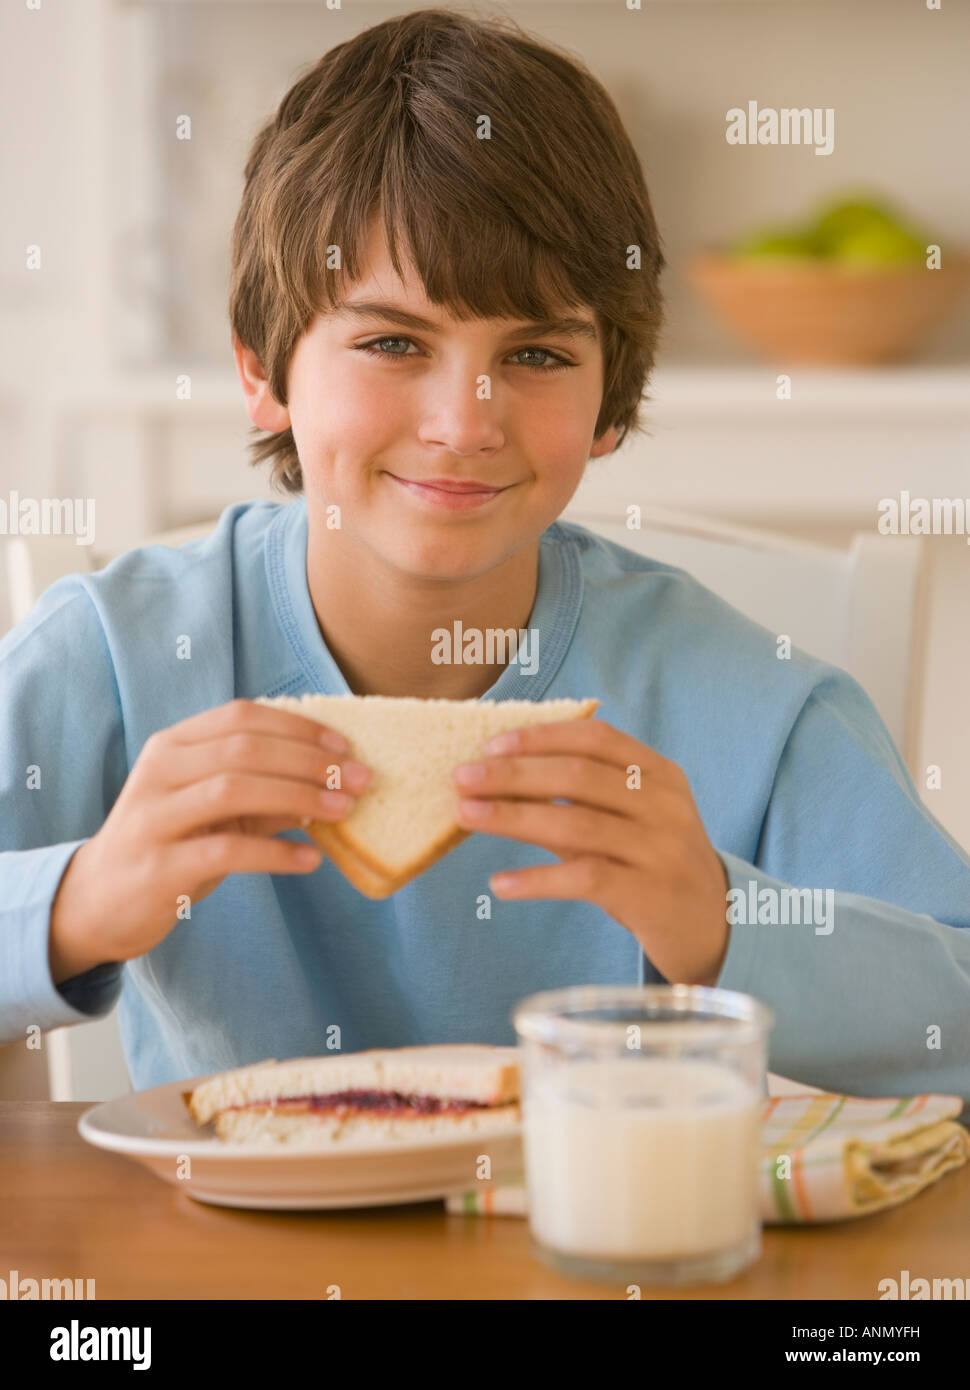 Boy eating sandwich Stock Photo